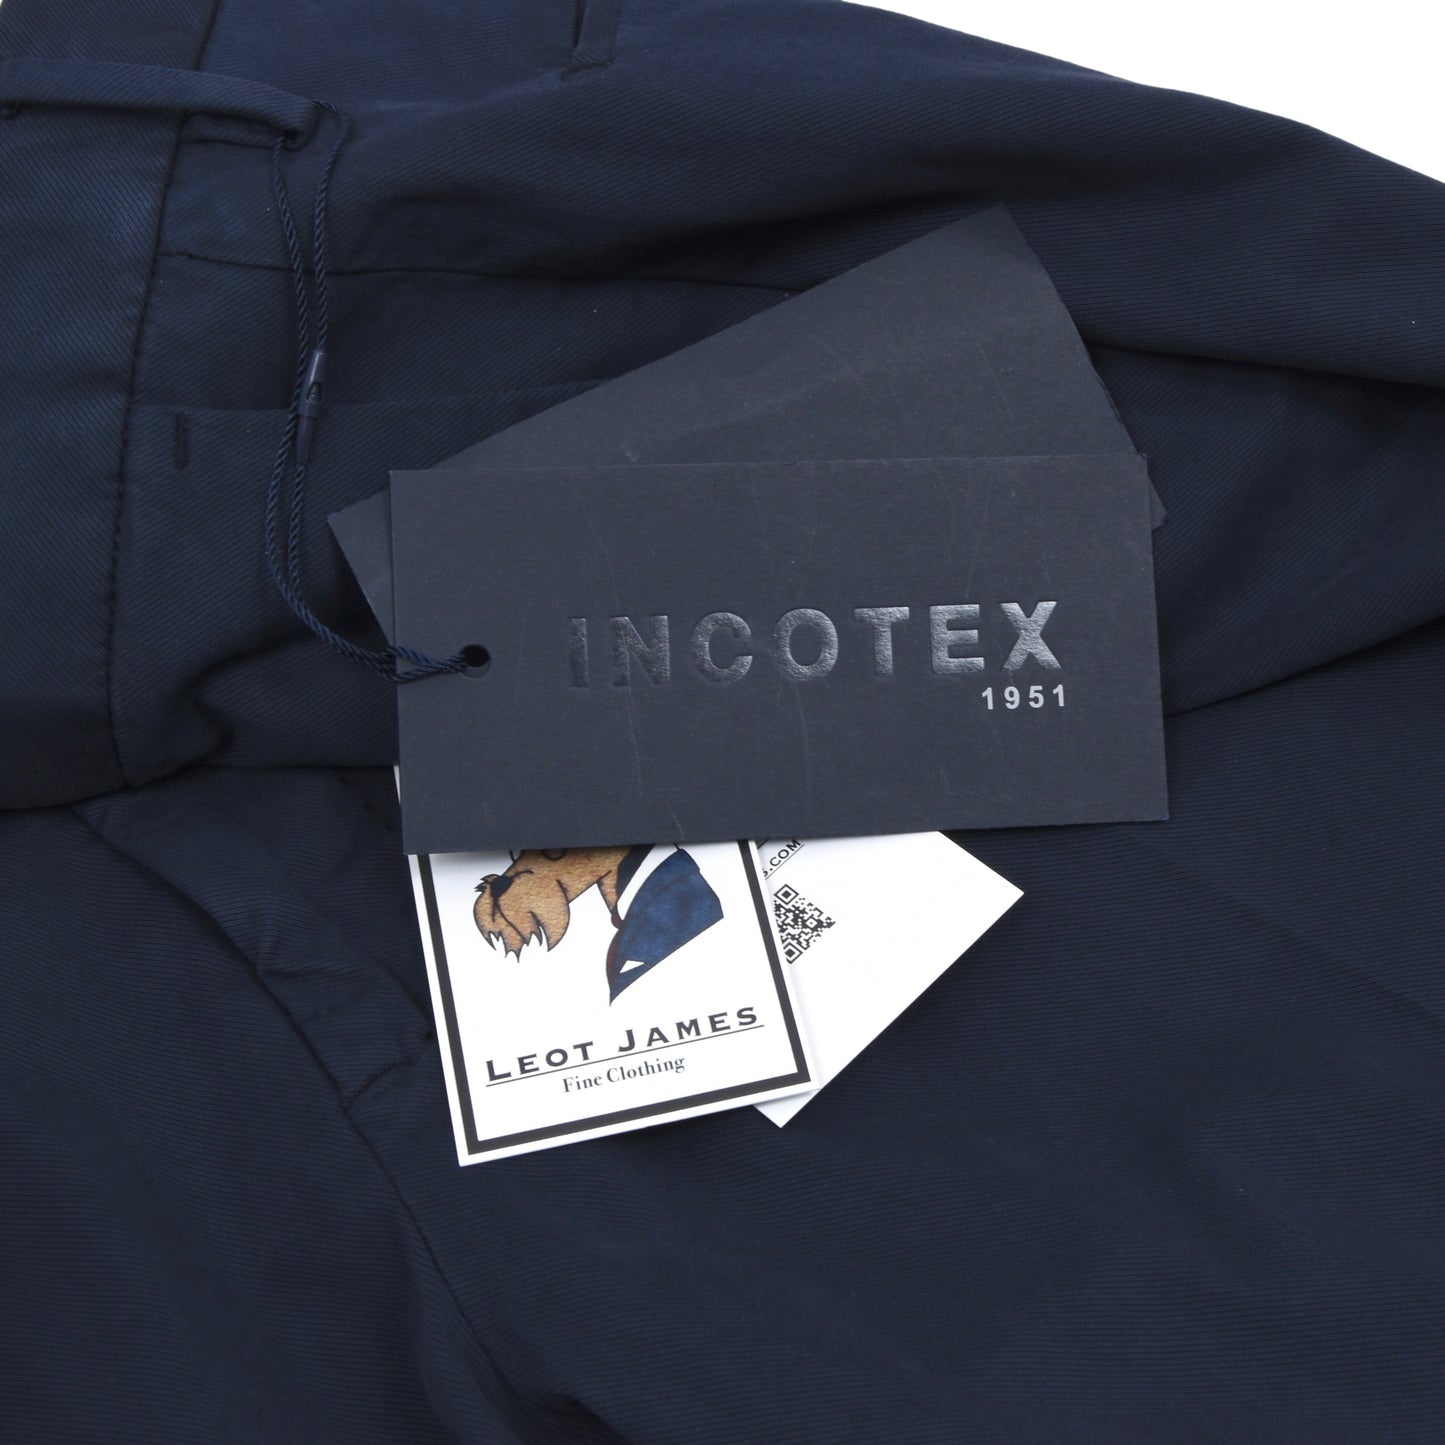 Neu mit Etikett Incotex Tight Fit High Comfort Hose Größe 58L – Marineblau